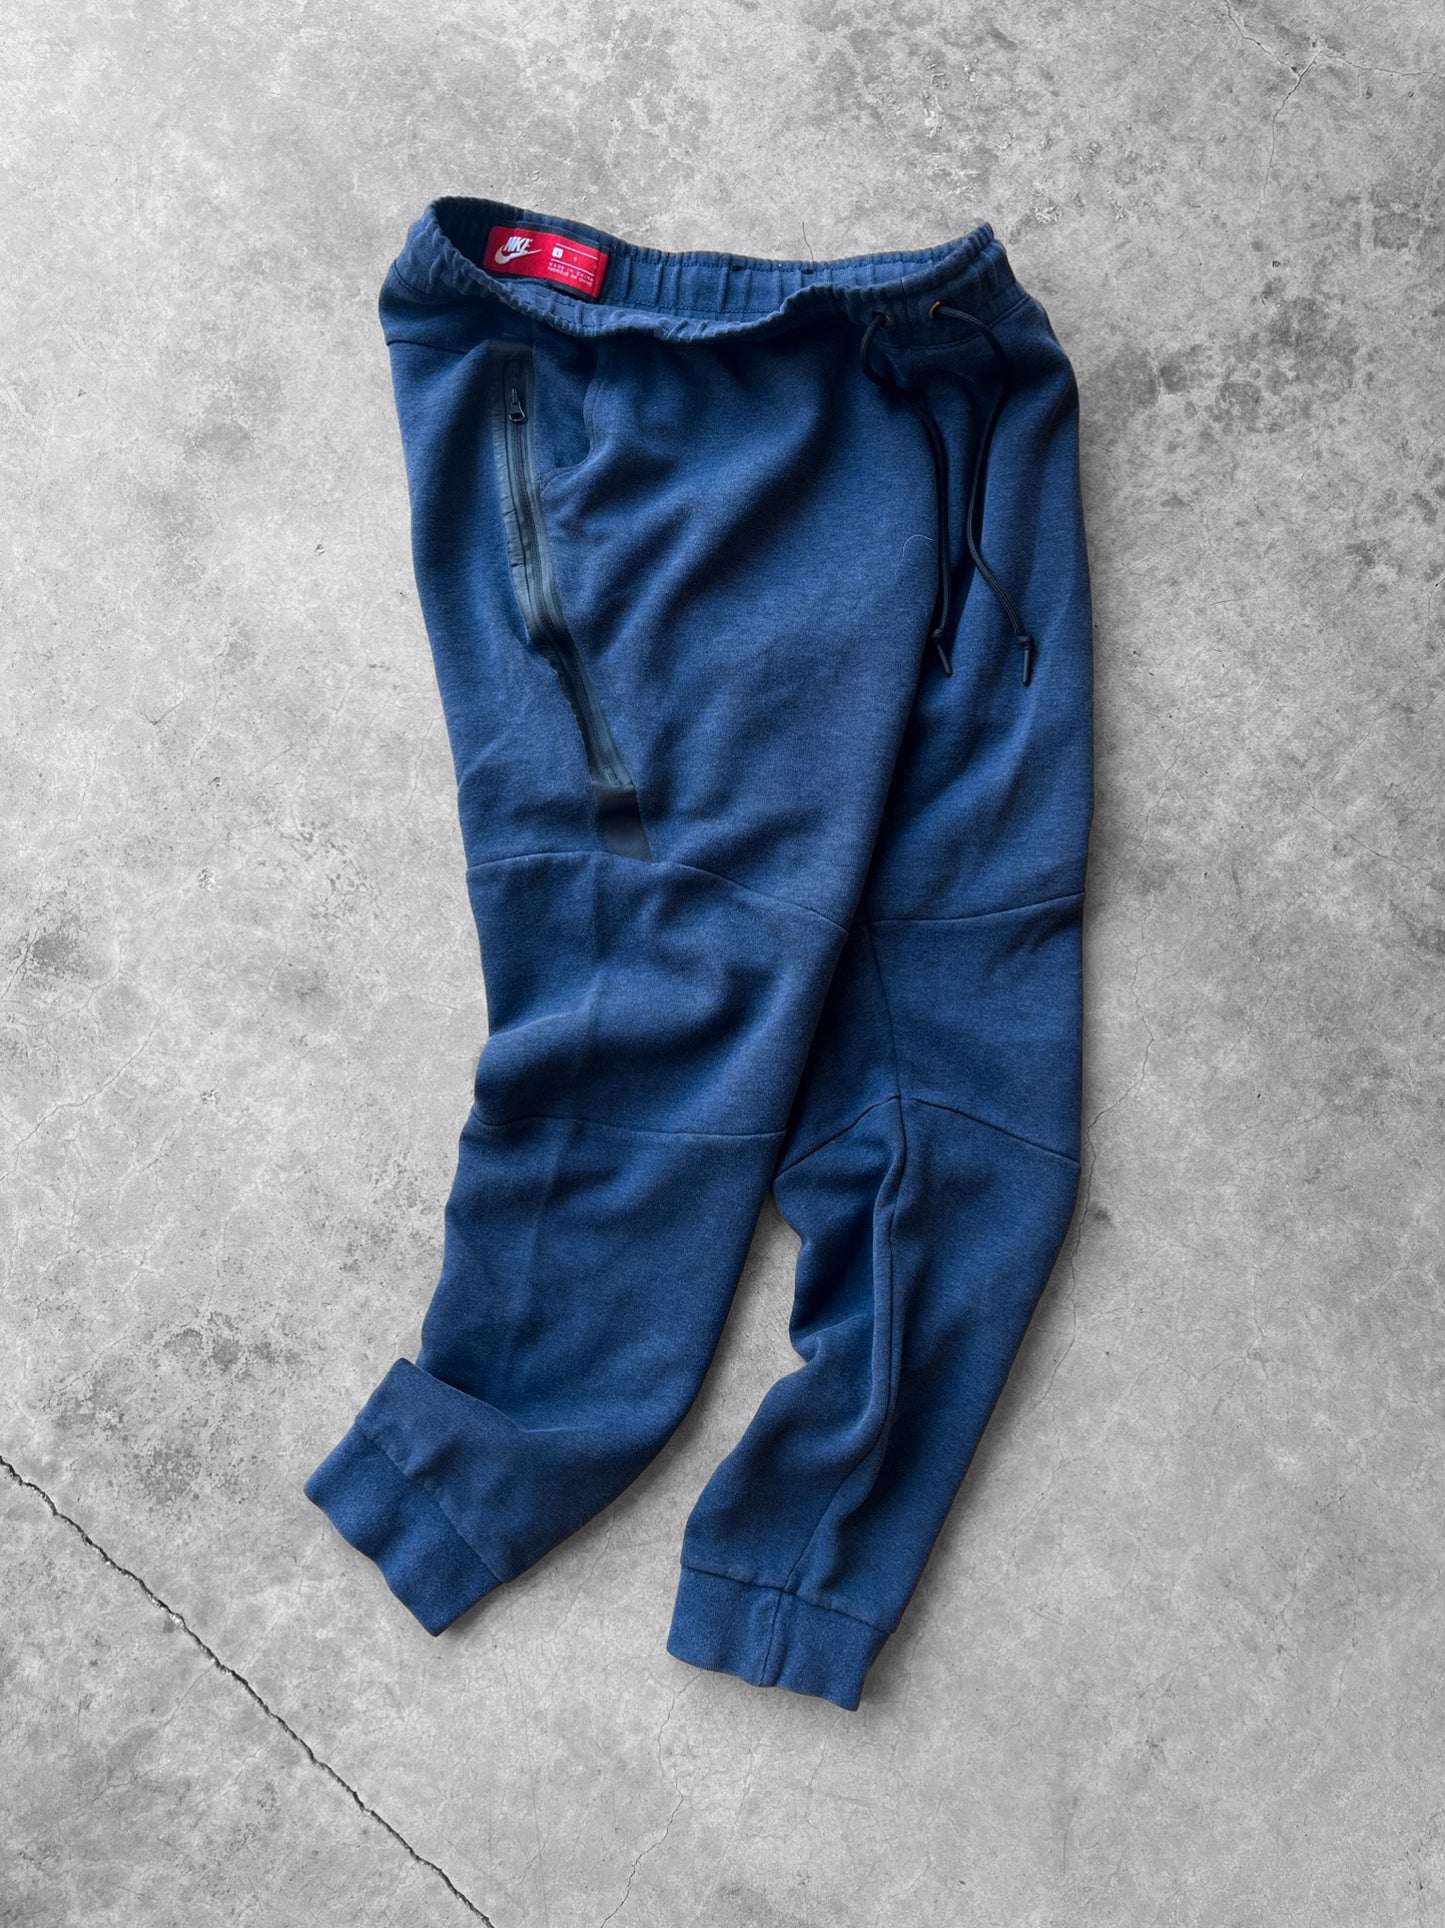 Nike Tech Fleece Sweatpants - XL